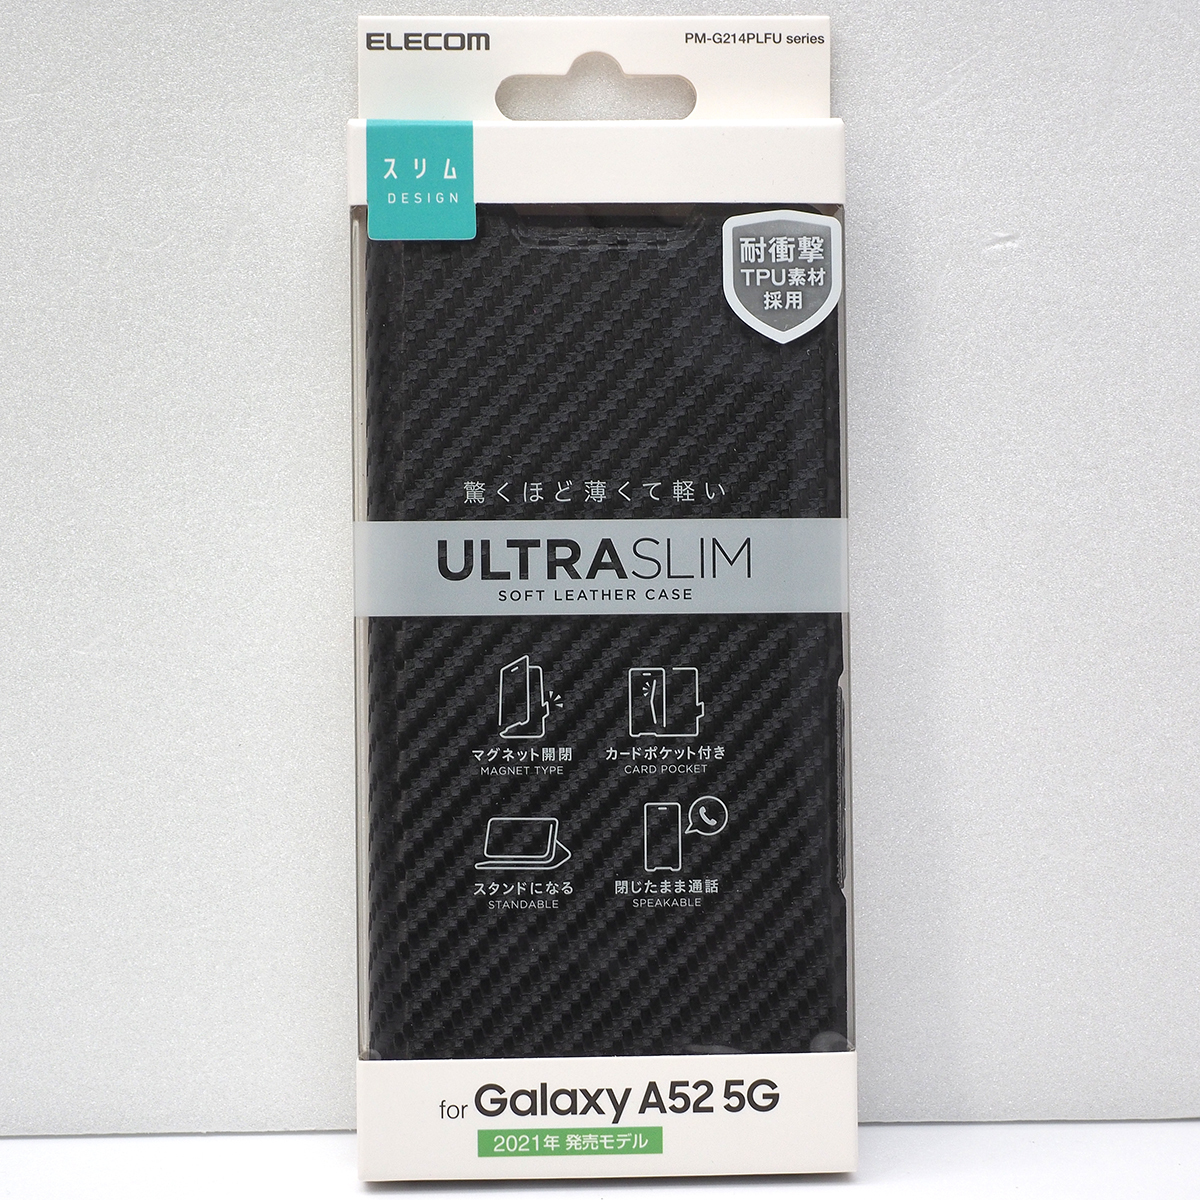 Galaxy A52 5G (docomo SC-53B) 用 ULTRASLIM 薄型 軽量 手帳型ケース ソフトレザーケース カーボン調ブラック 未開封 ギャラクシーA52 5G_画像1